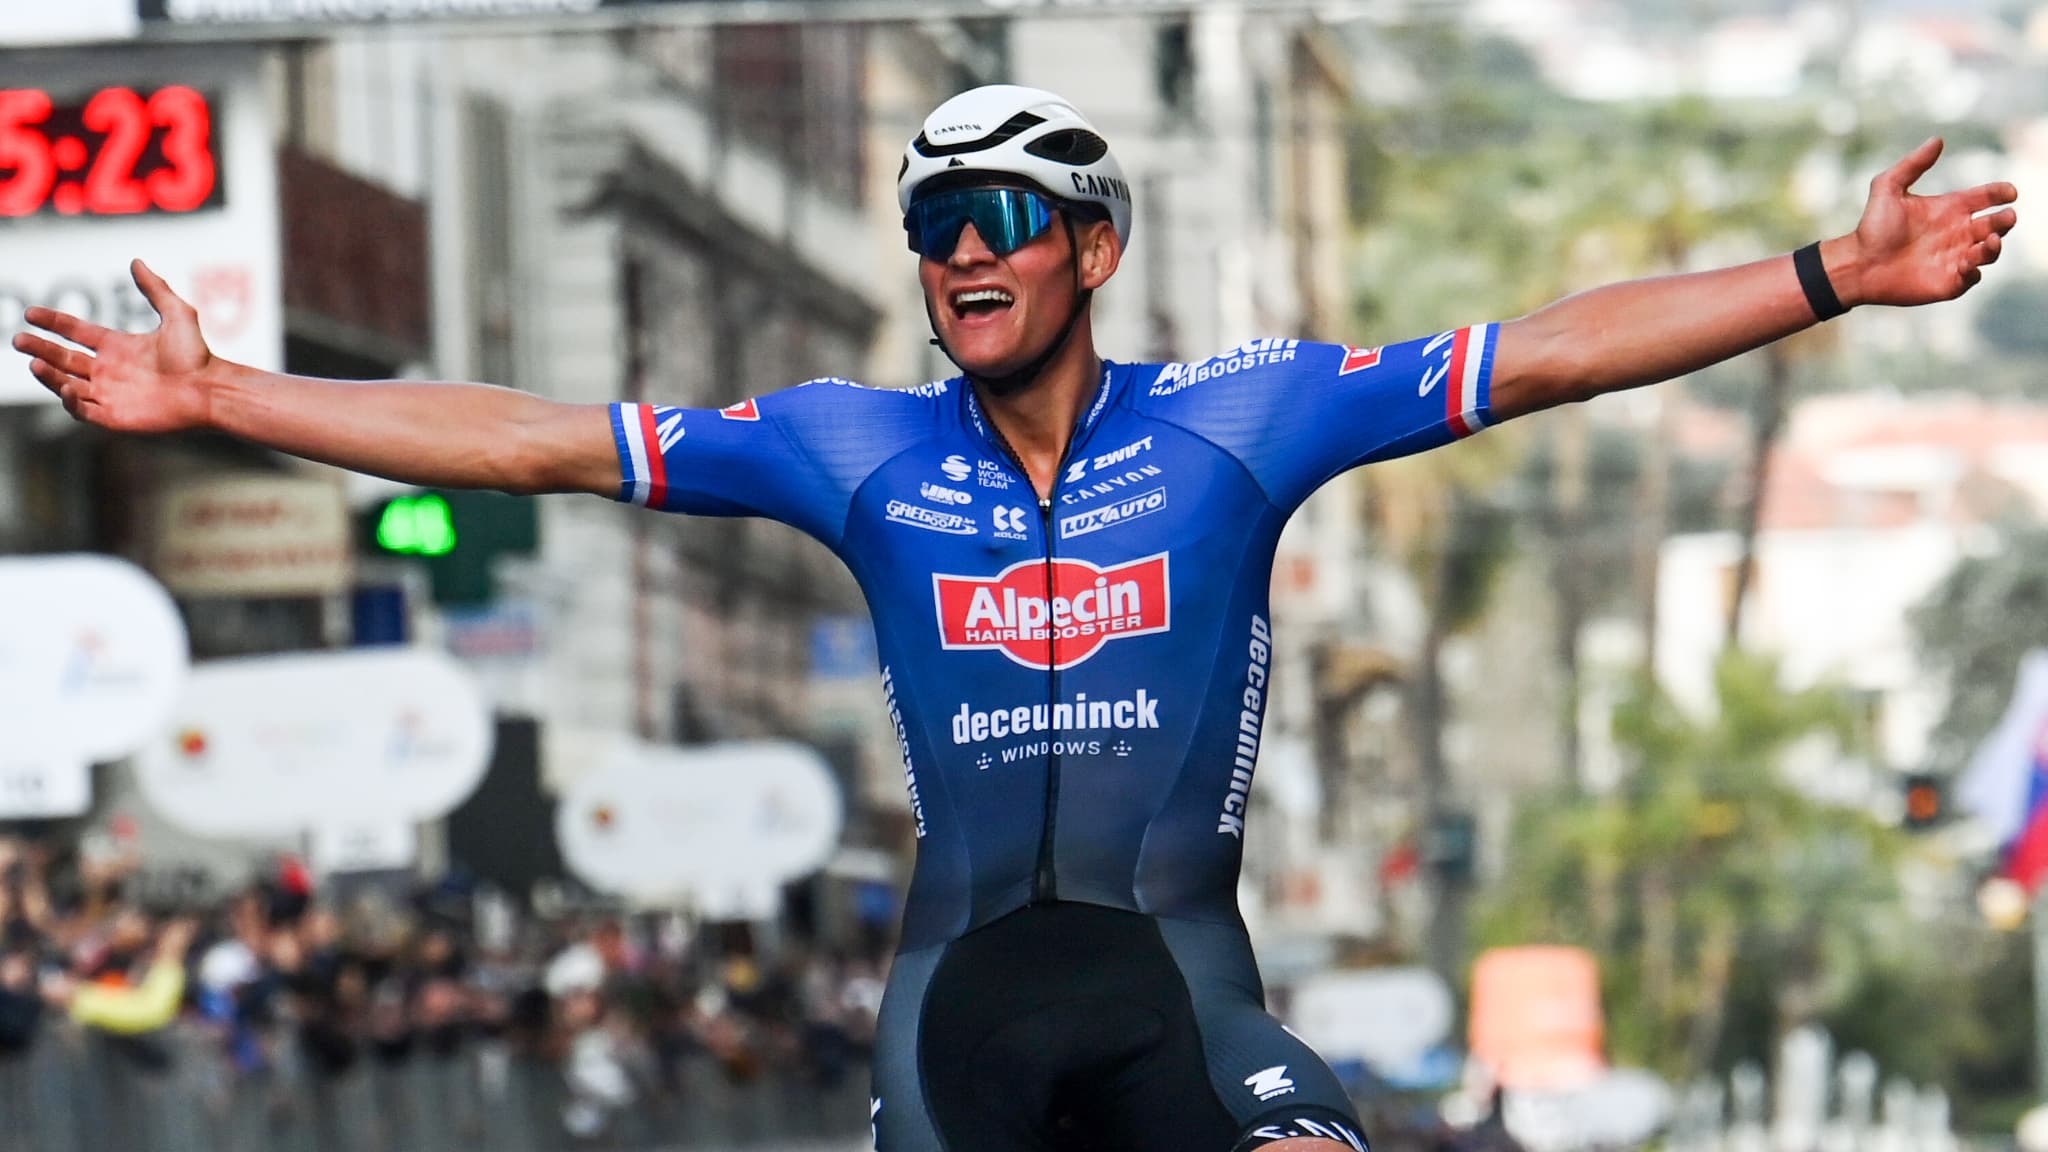 Cyclisme Mathieu van der Poel remporte MilanSanremo, 62 ans après son